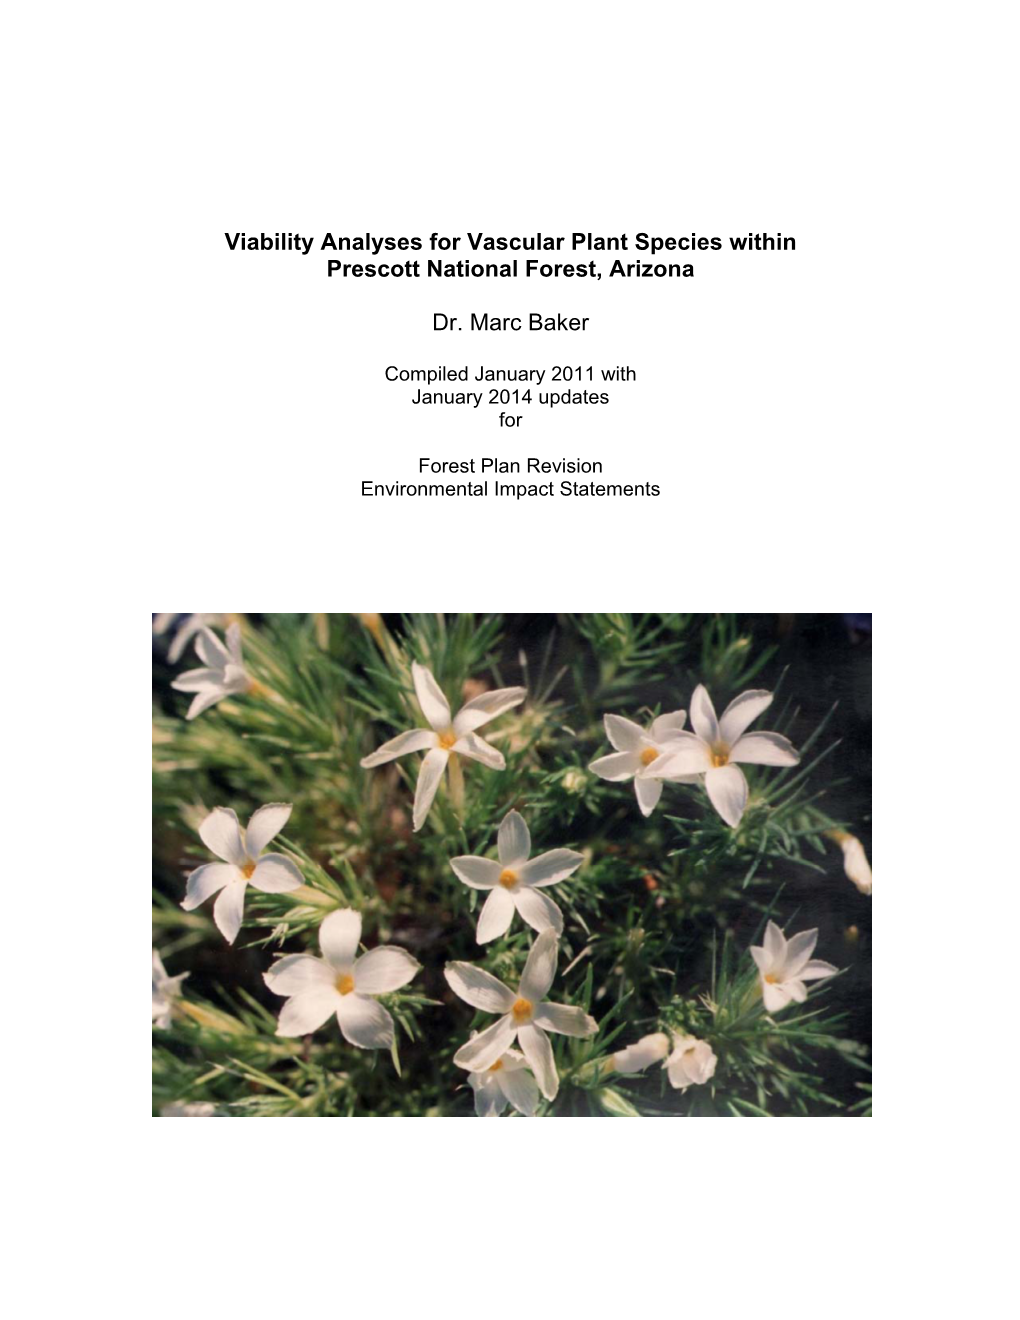 Viability Analyses for Vascular Plant Species Within Prescott National Forest, Arizona